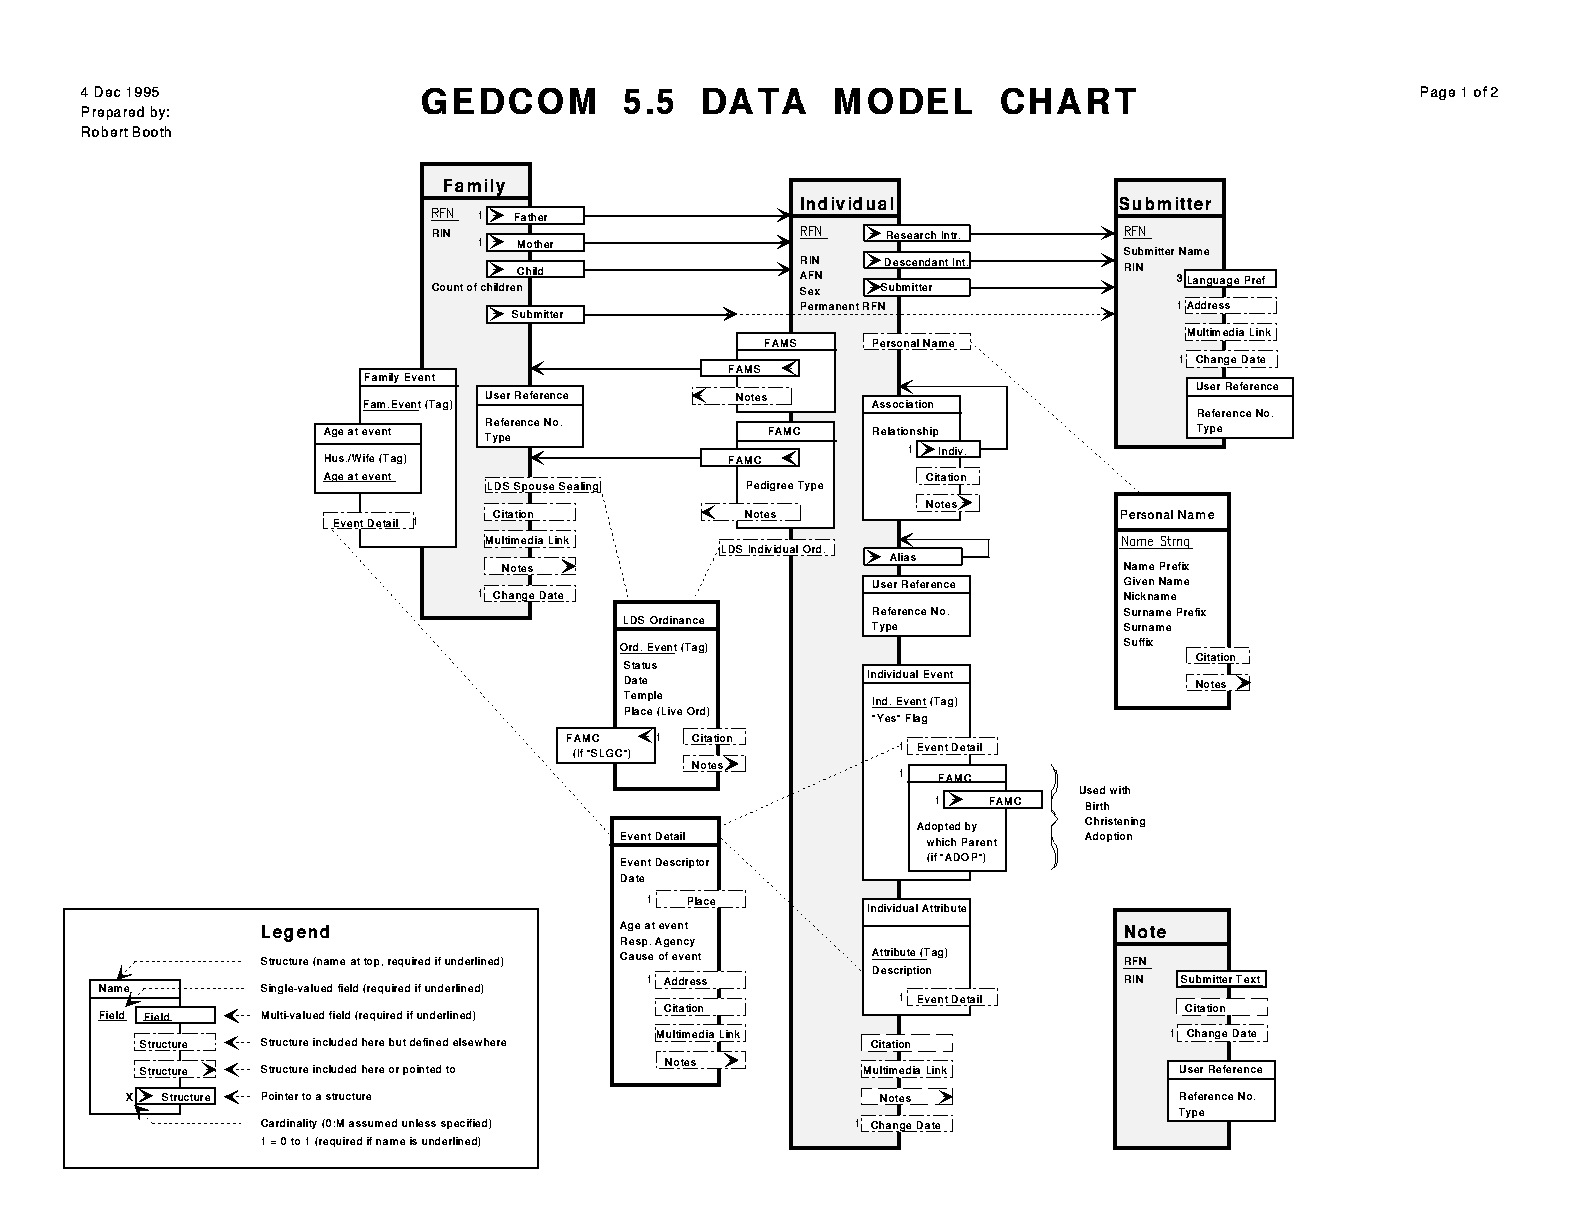 GEDCOM 5.5 Data Model Chart, Page 1